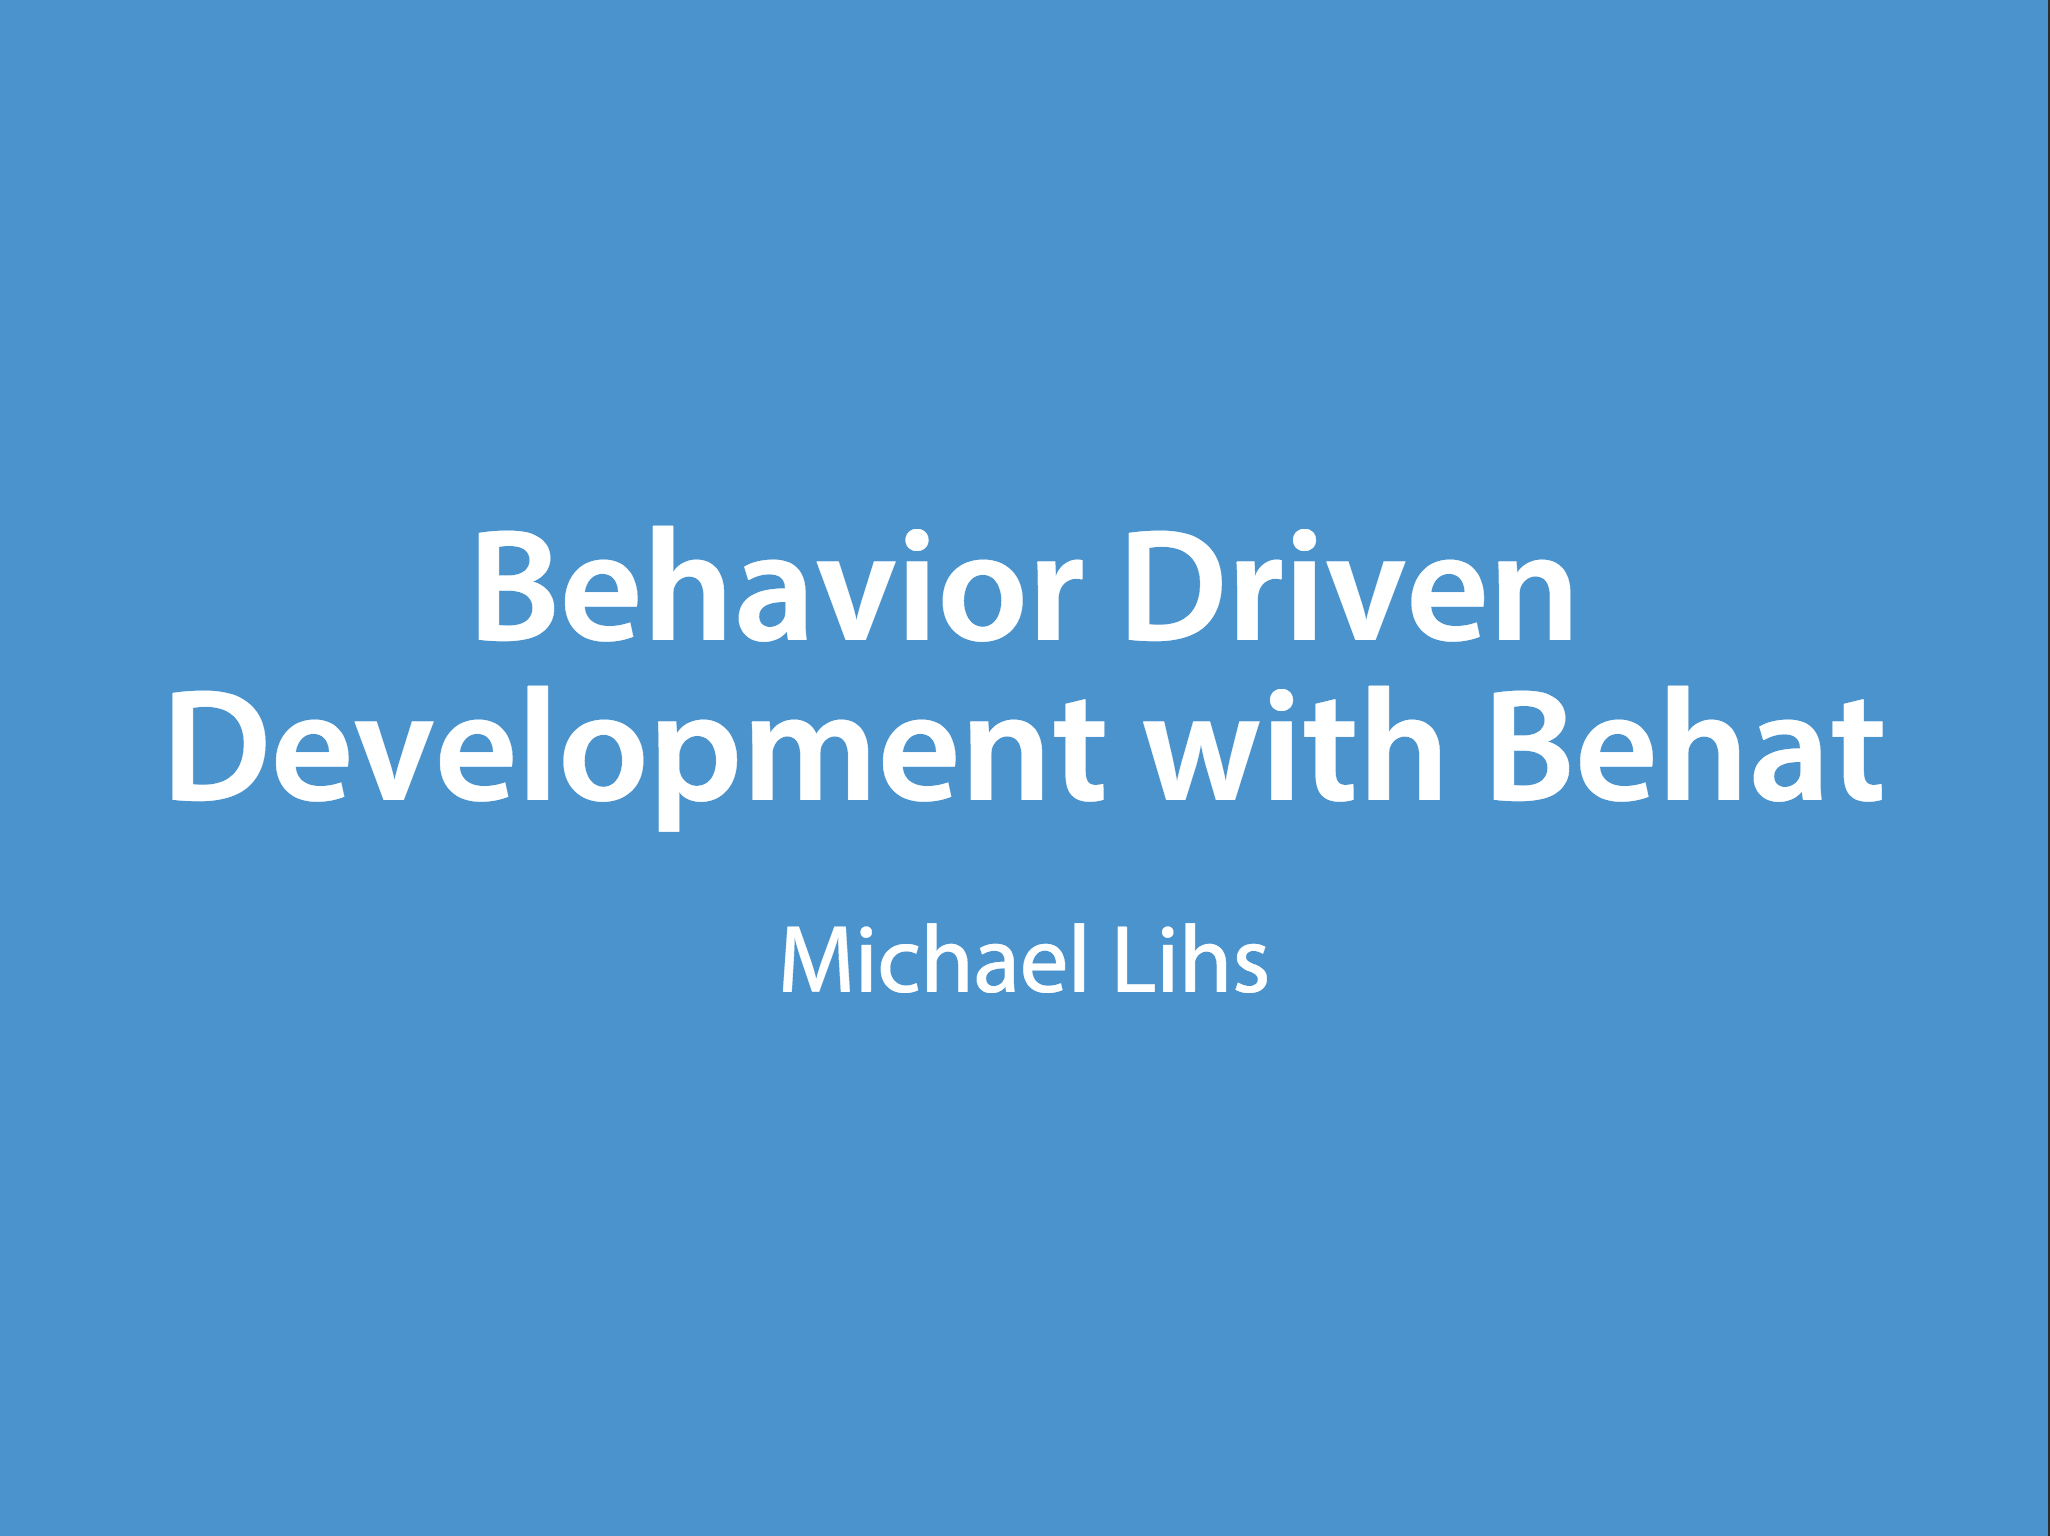 Slides for Behavior Driven Development with Behat